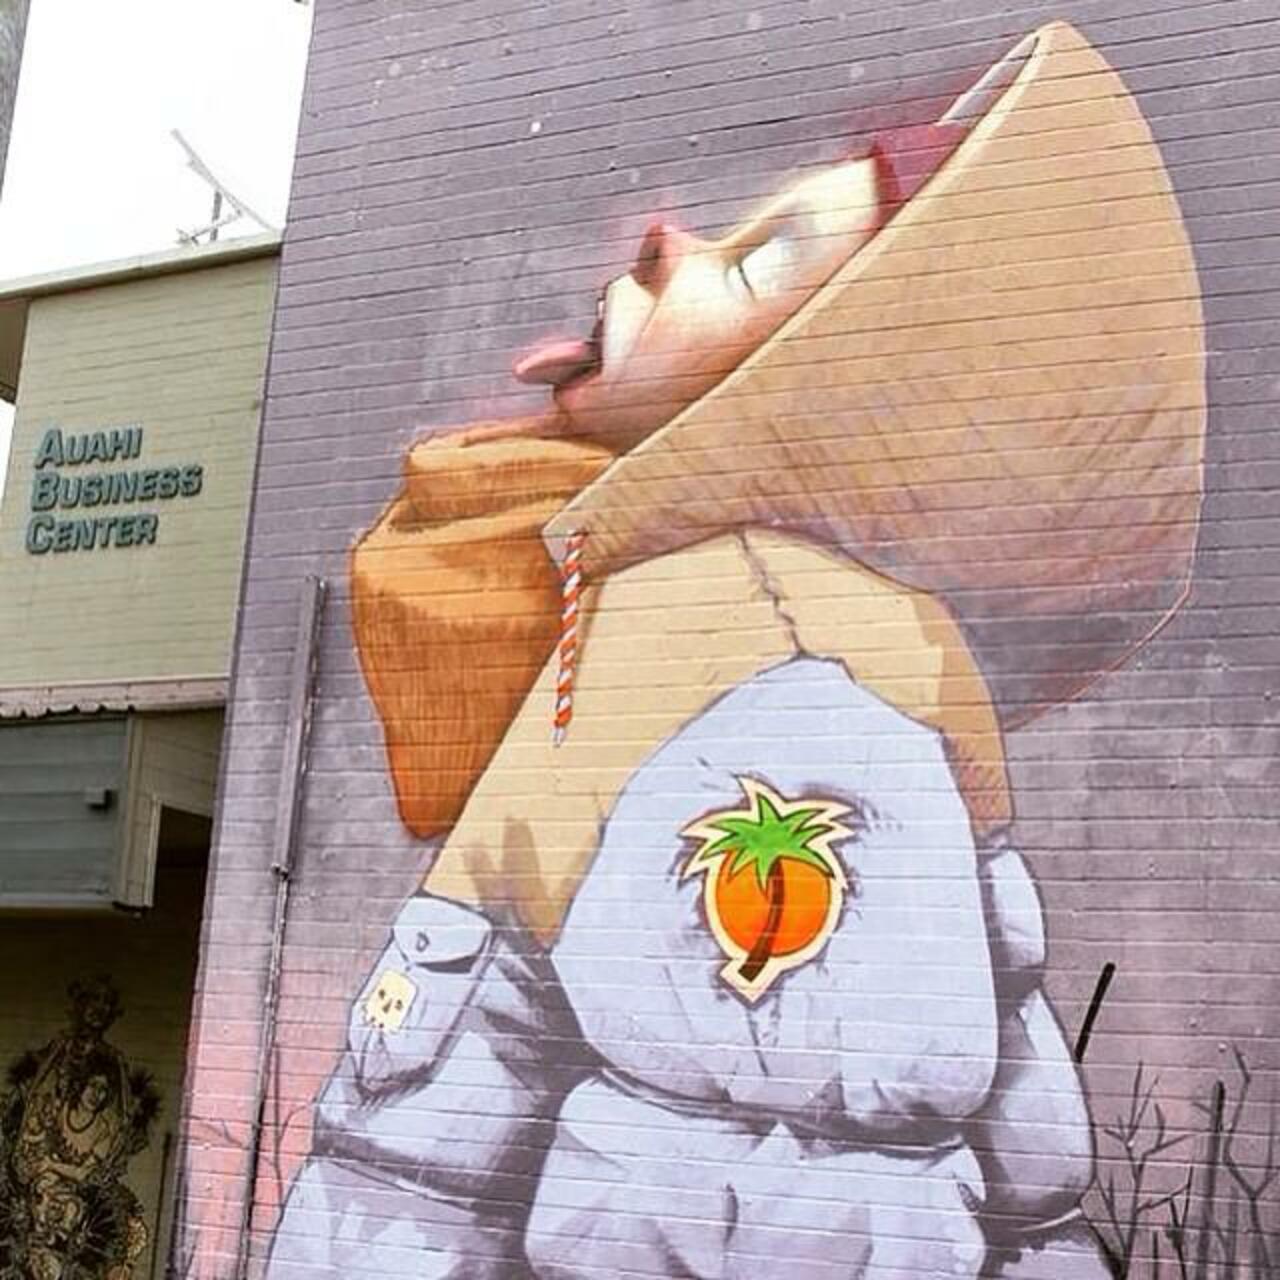 #sprayart #stencil #streetart #graffiti #urbanart #mural #murales http://t.co/CbotEjBexF